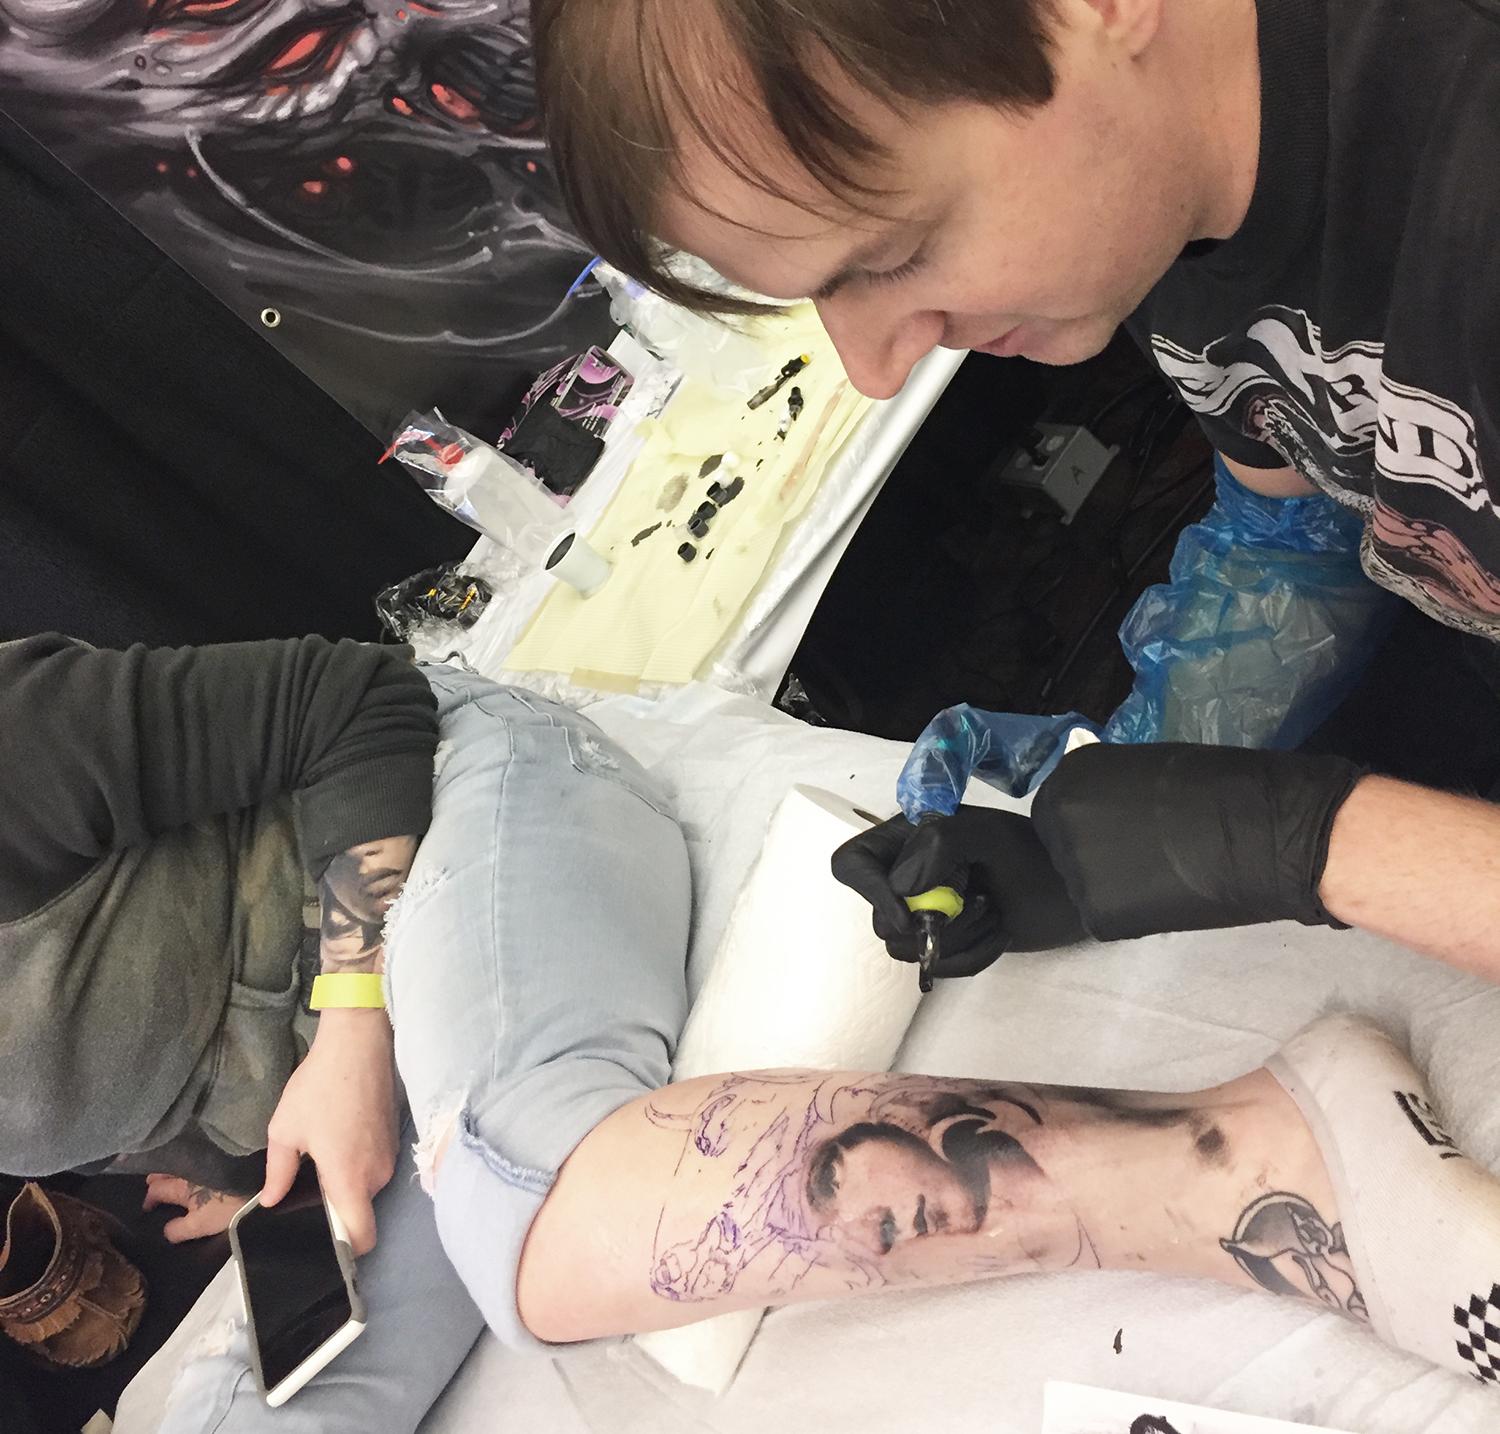 David Gluck, the tattoo artist at van isle expo